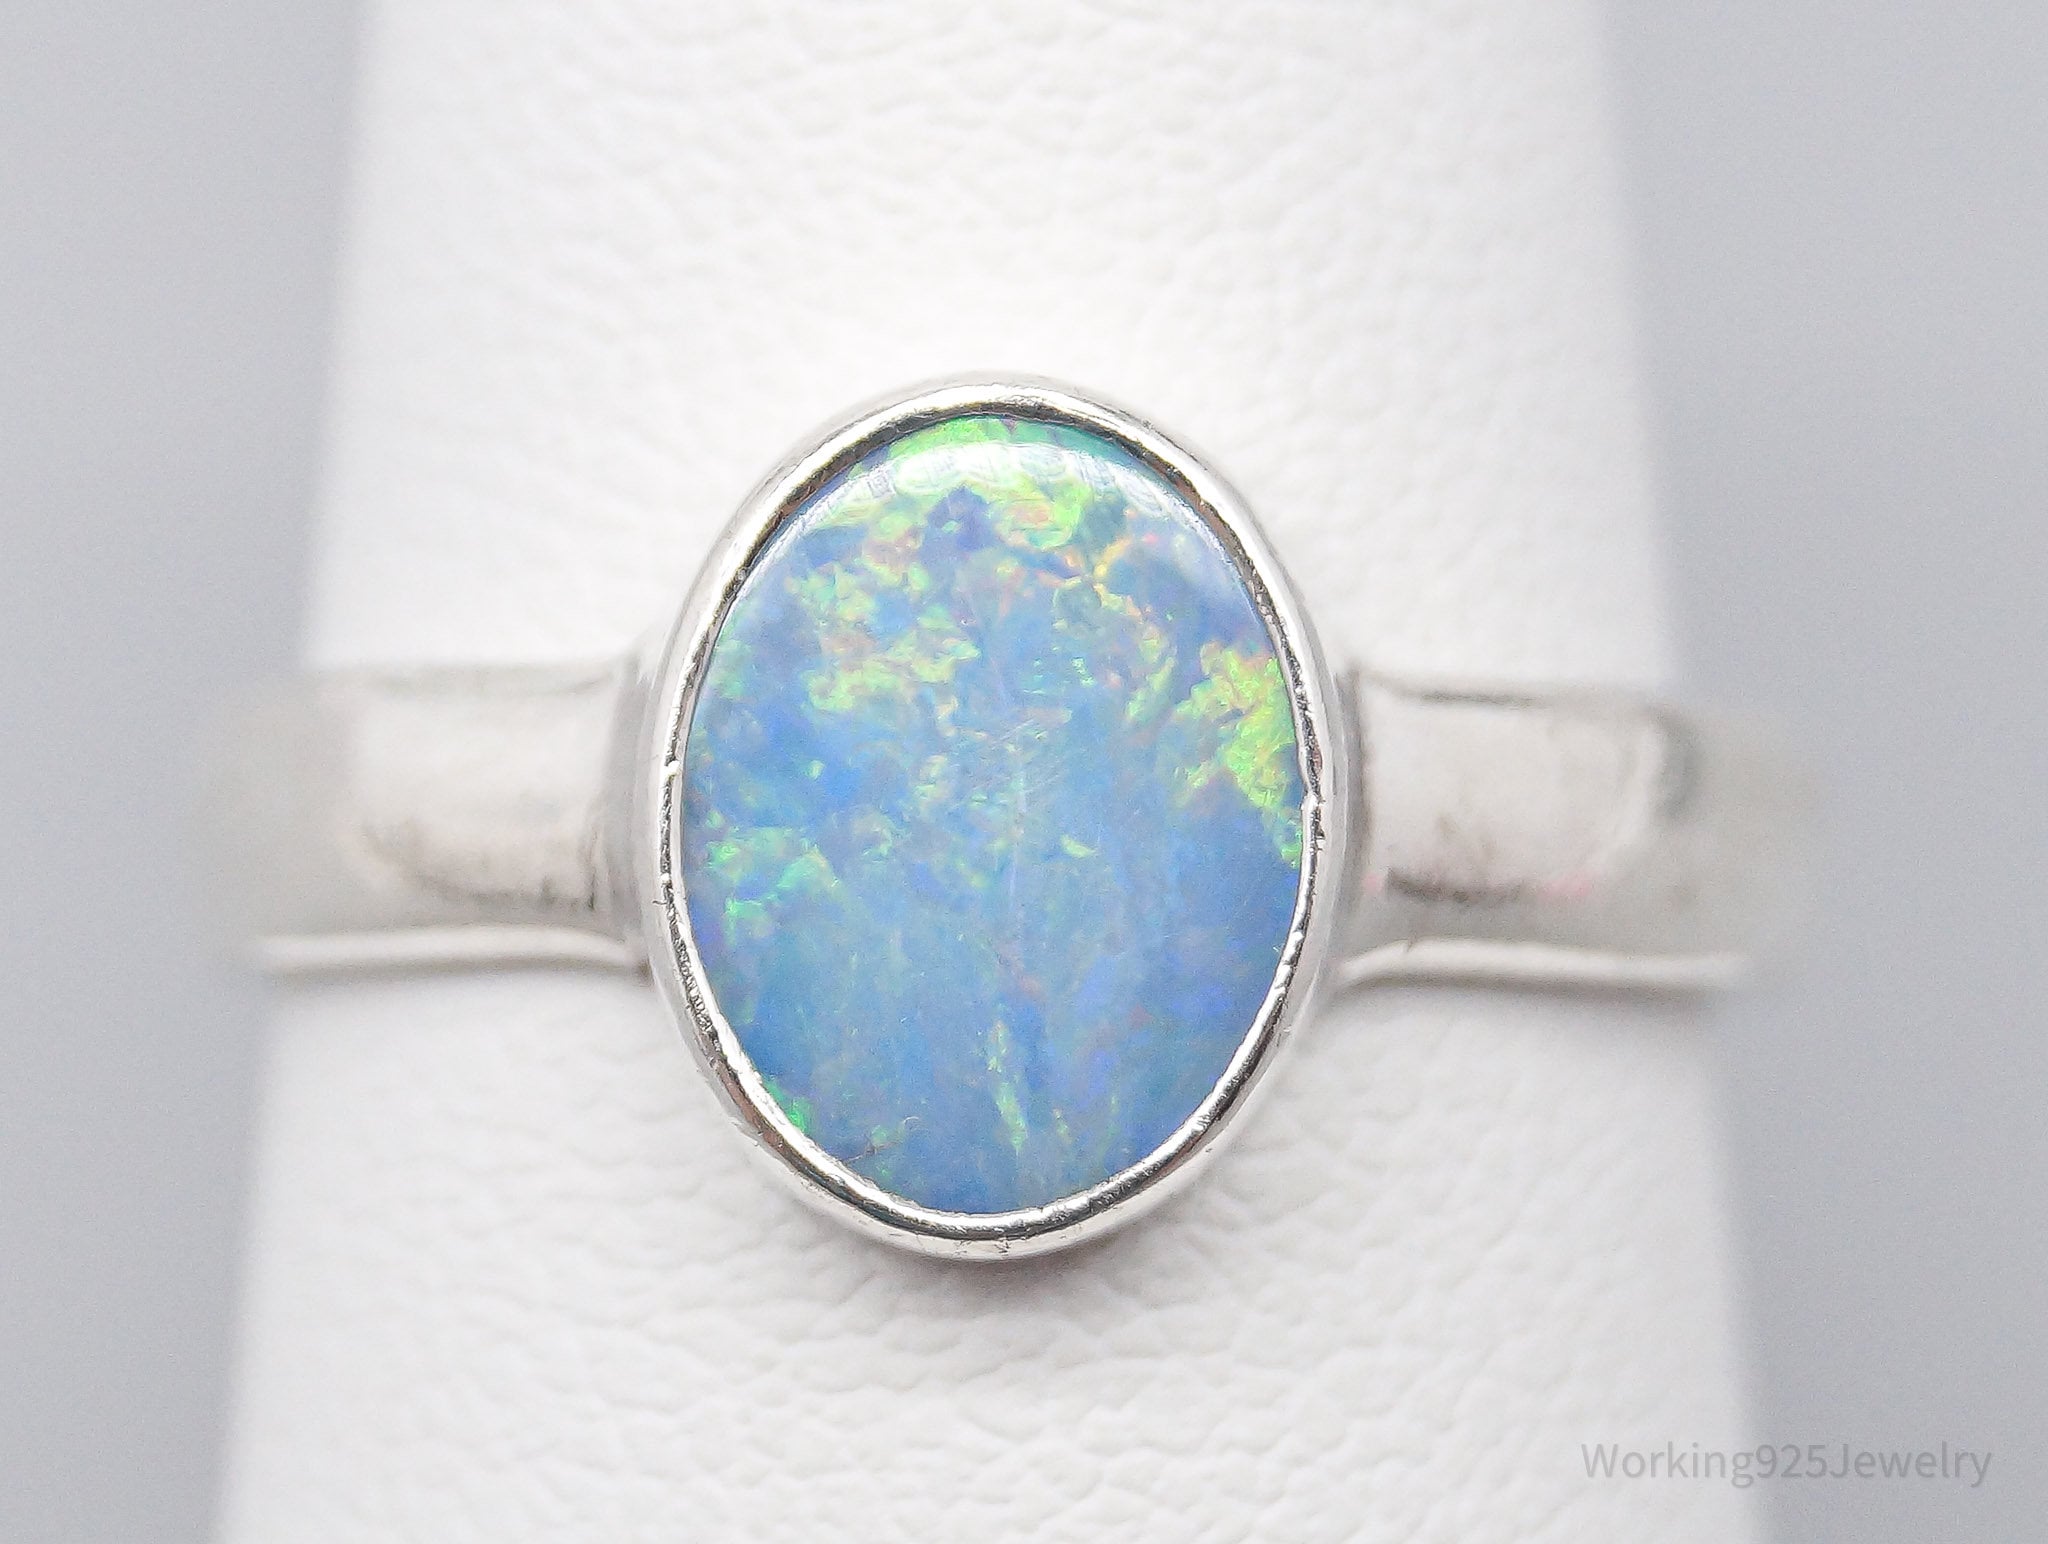 Vintage Blue Opal Sterling Silver Ring - Size 6.75